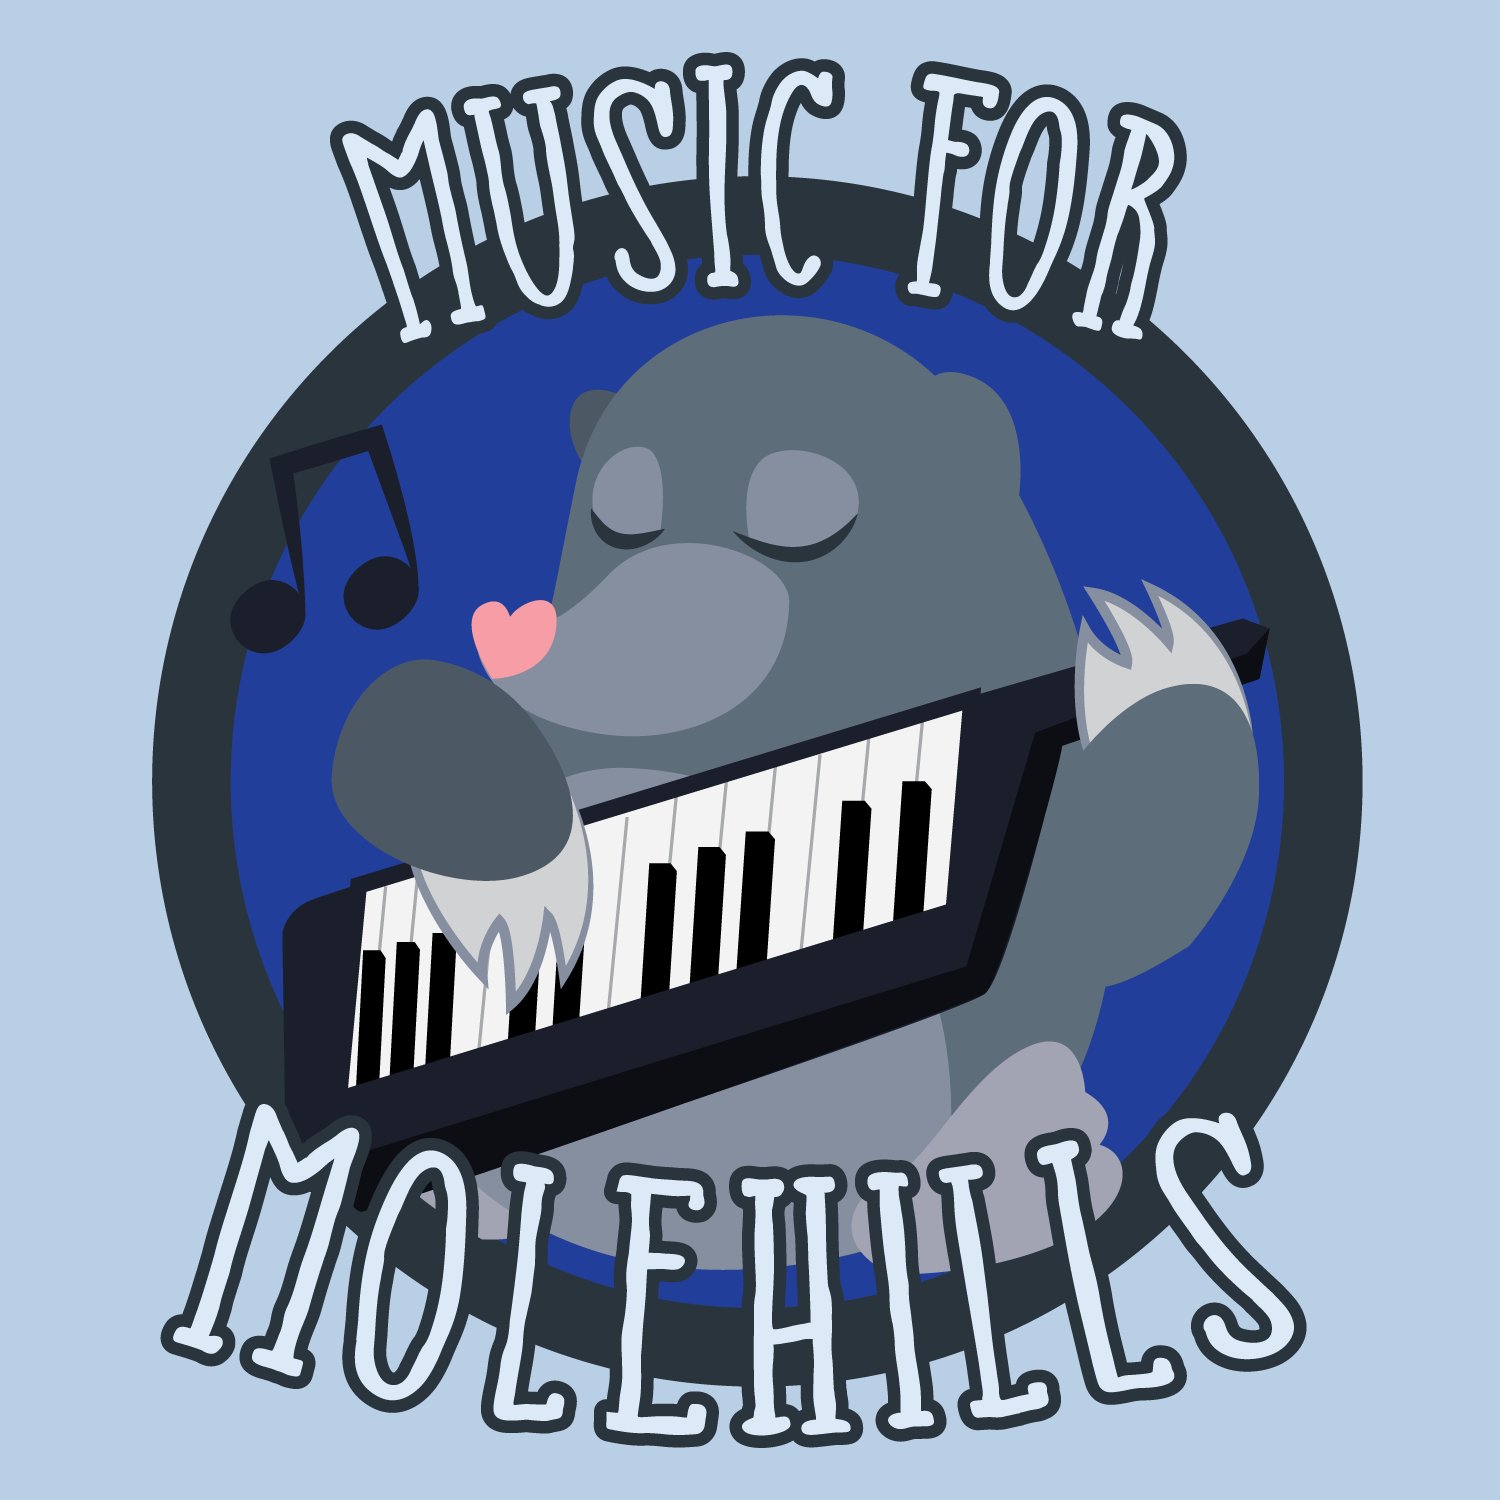 Music for Molehills